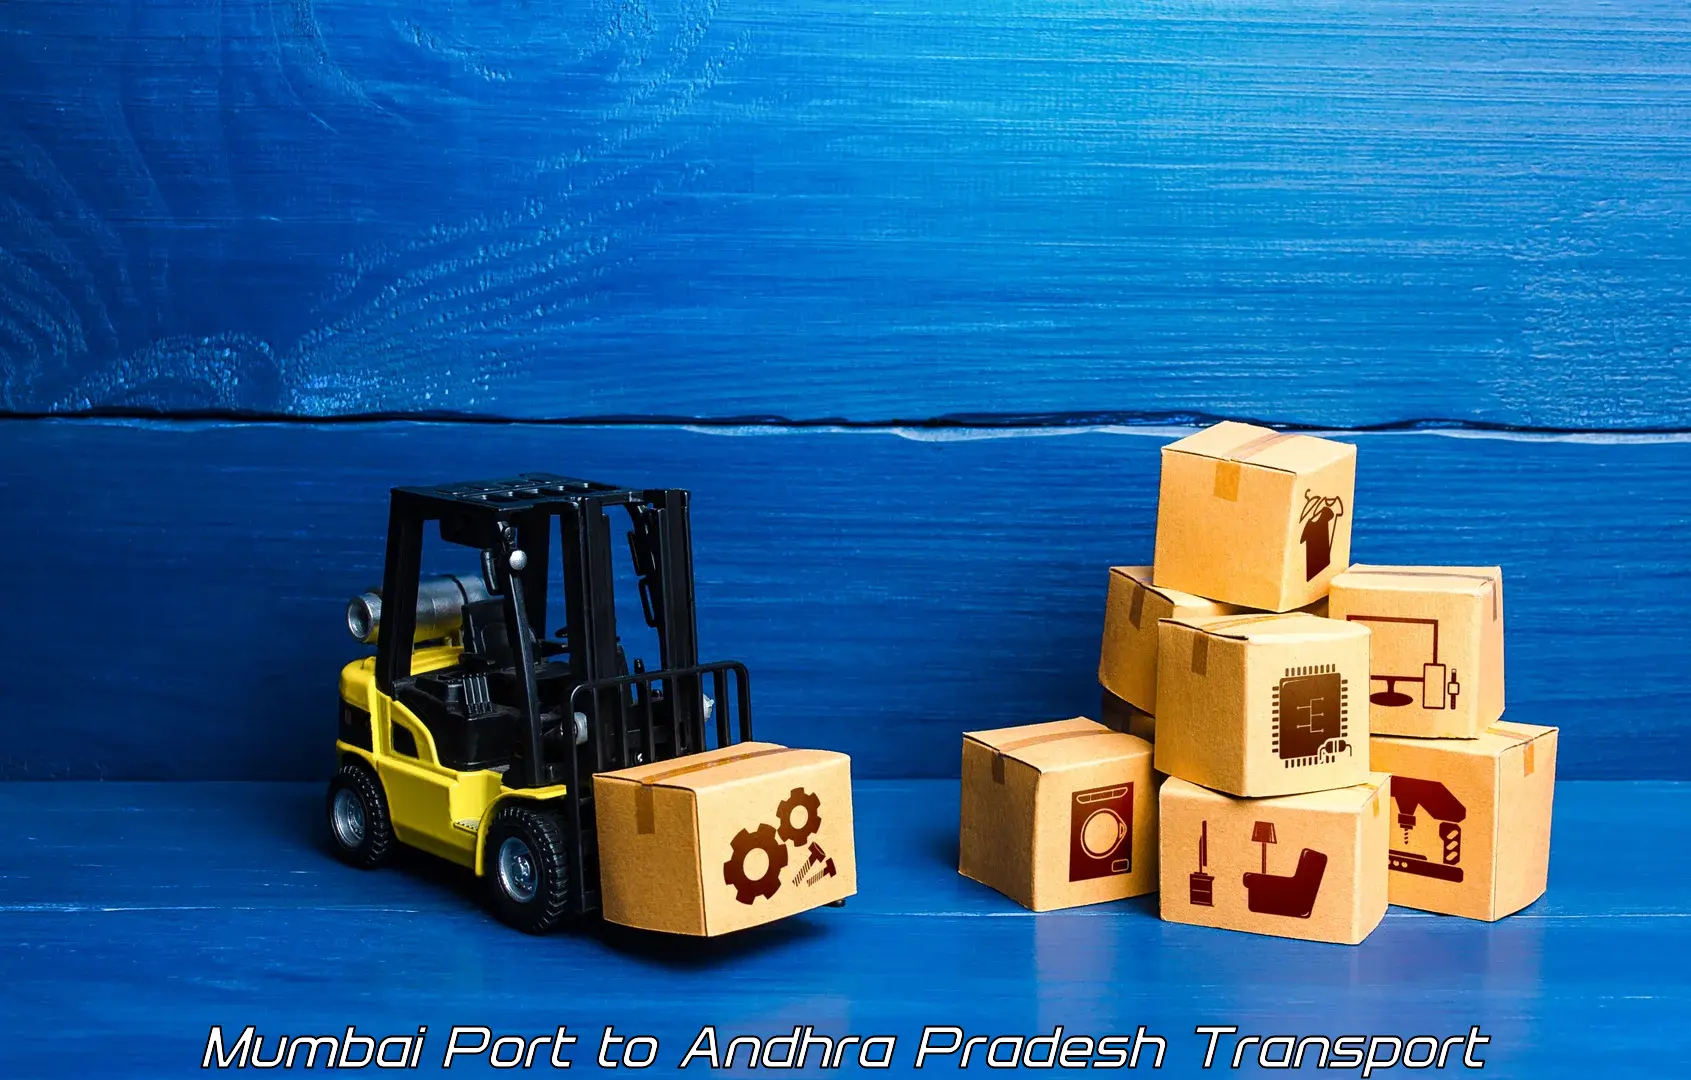 Container transport service Mumbai Port to Visakhapatnam